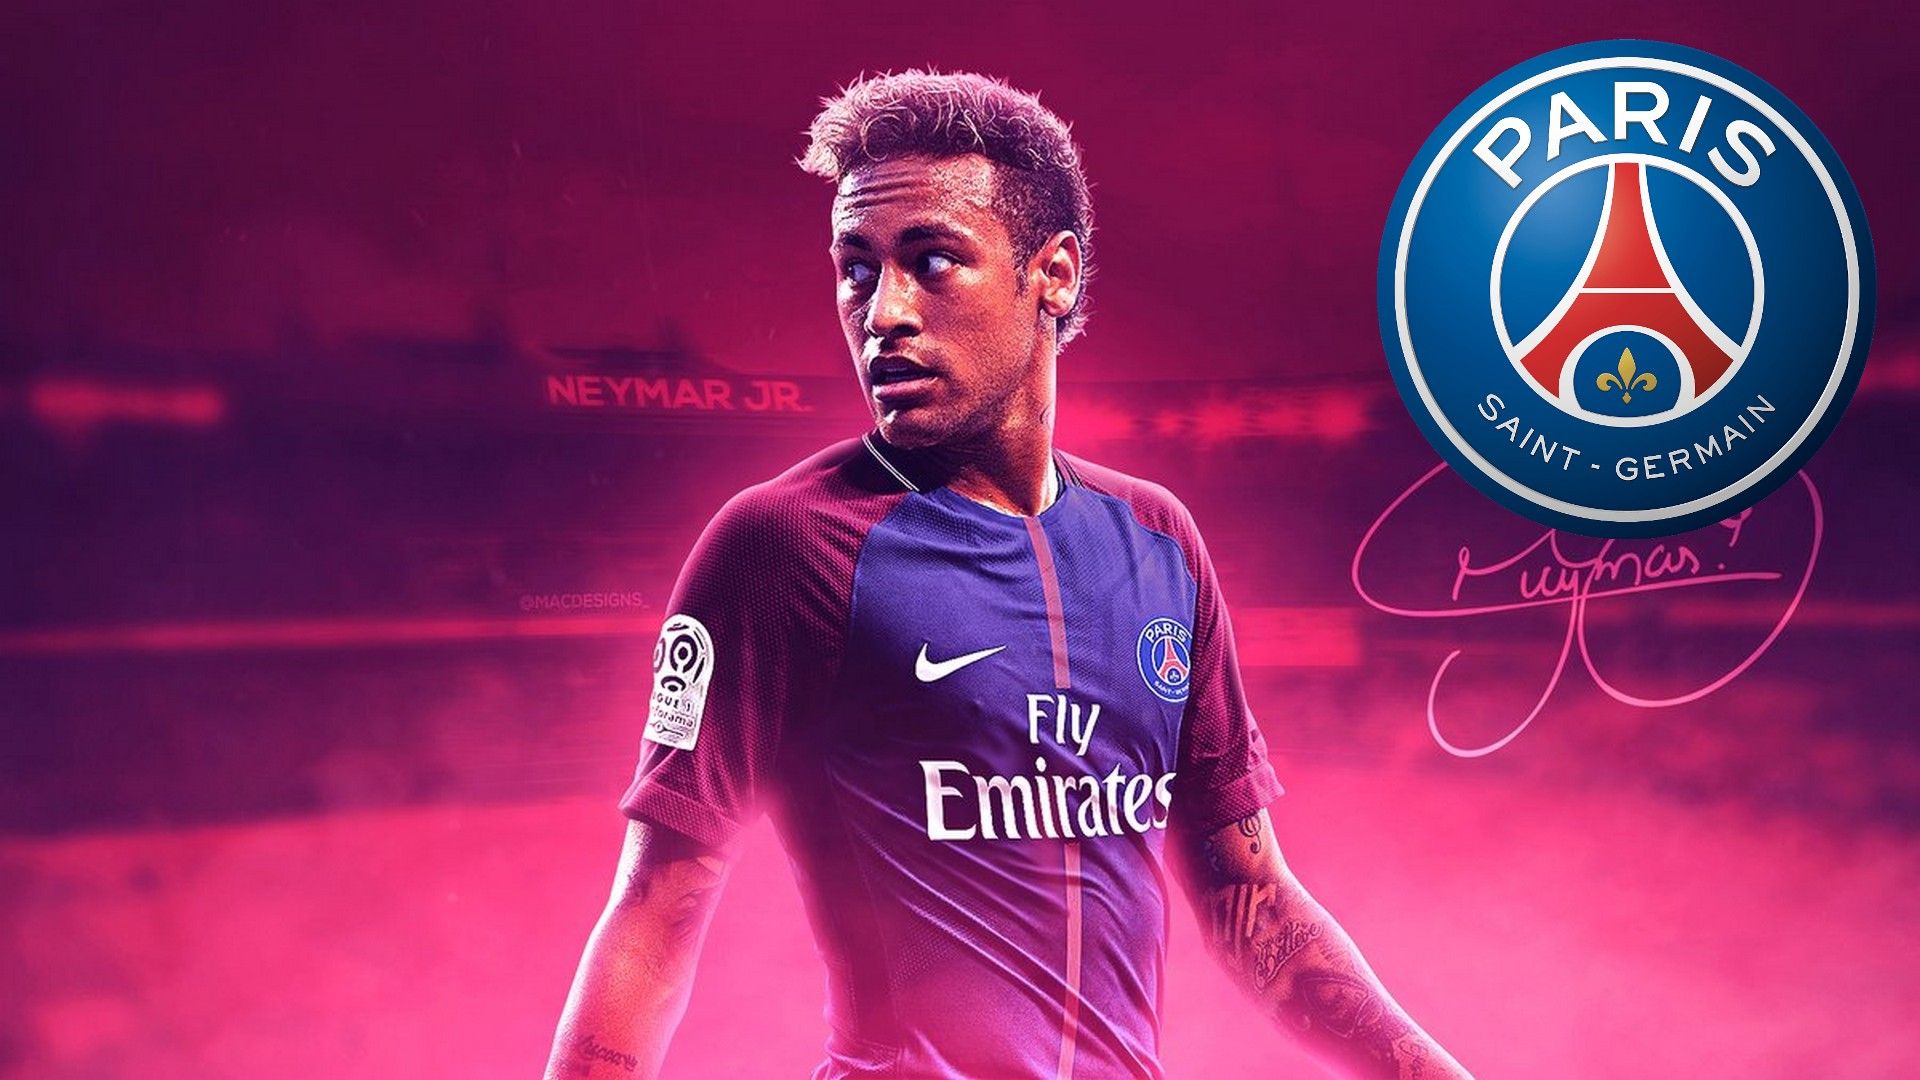 Neymar Jr PSG 2021 Wallpapers - Wallpaper Cave